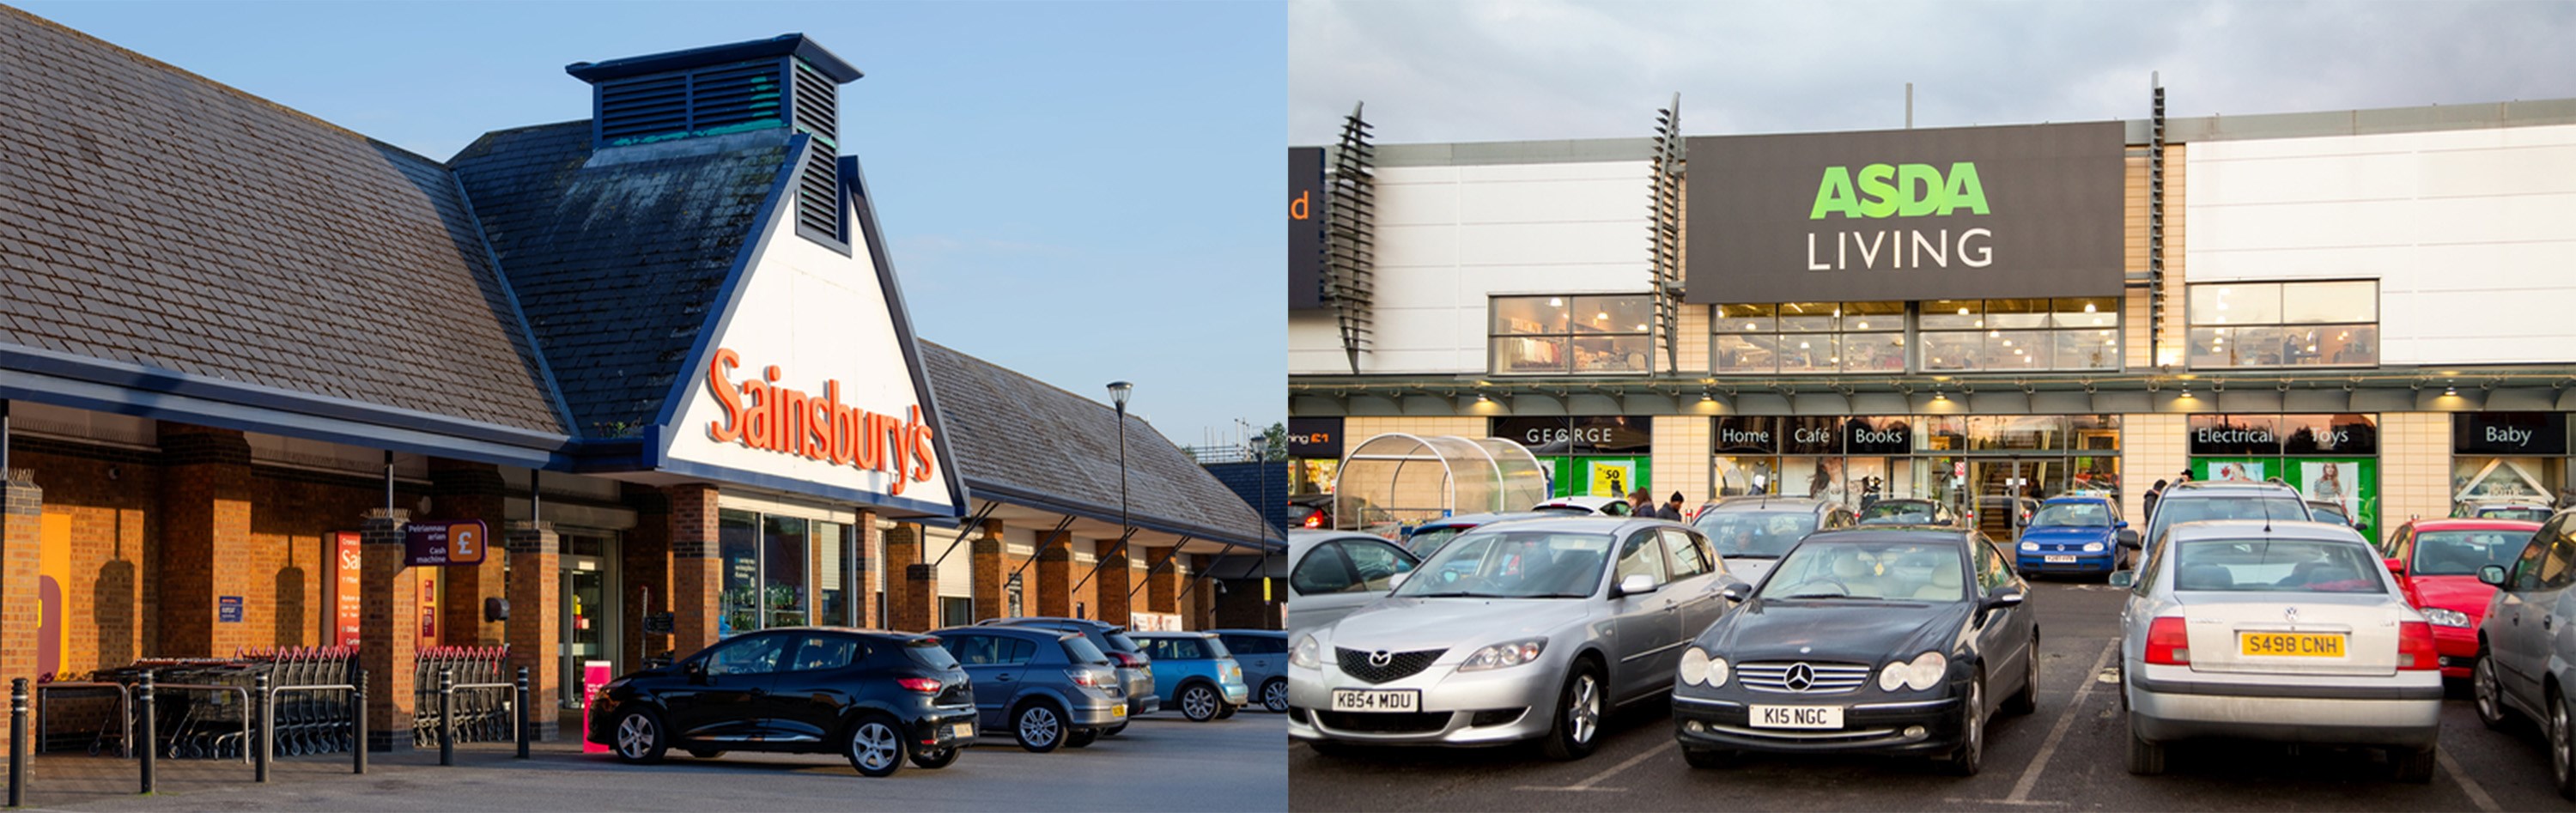 Sainsbury's and Asda, proposed merger